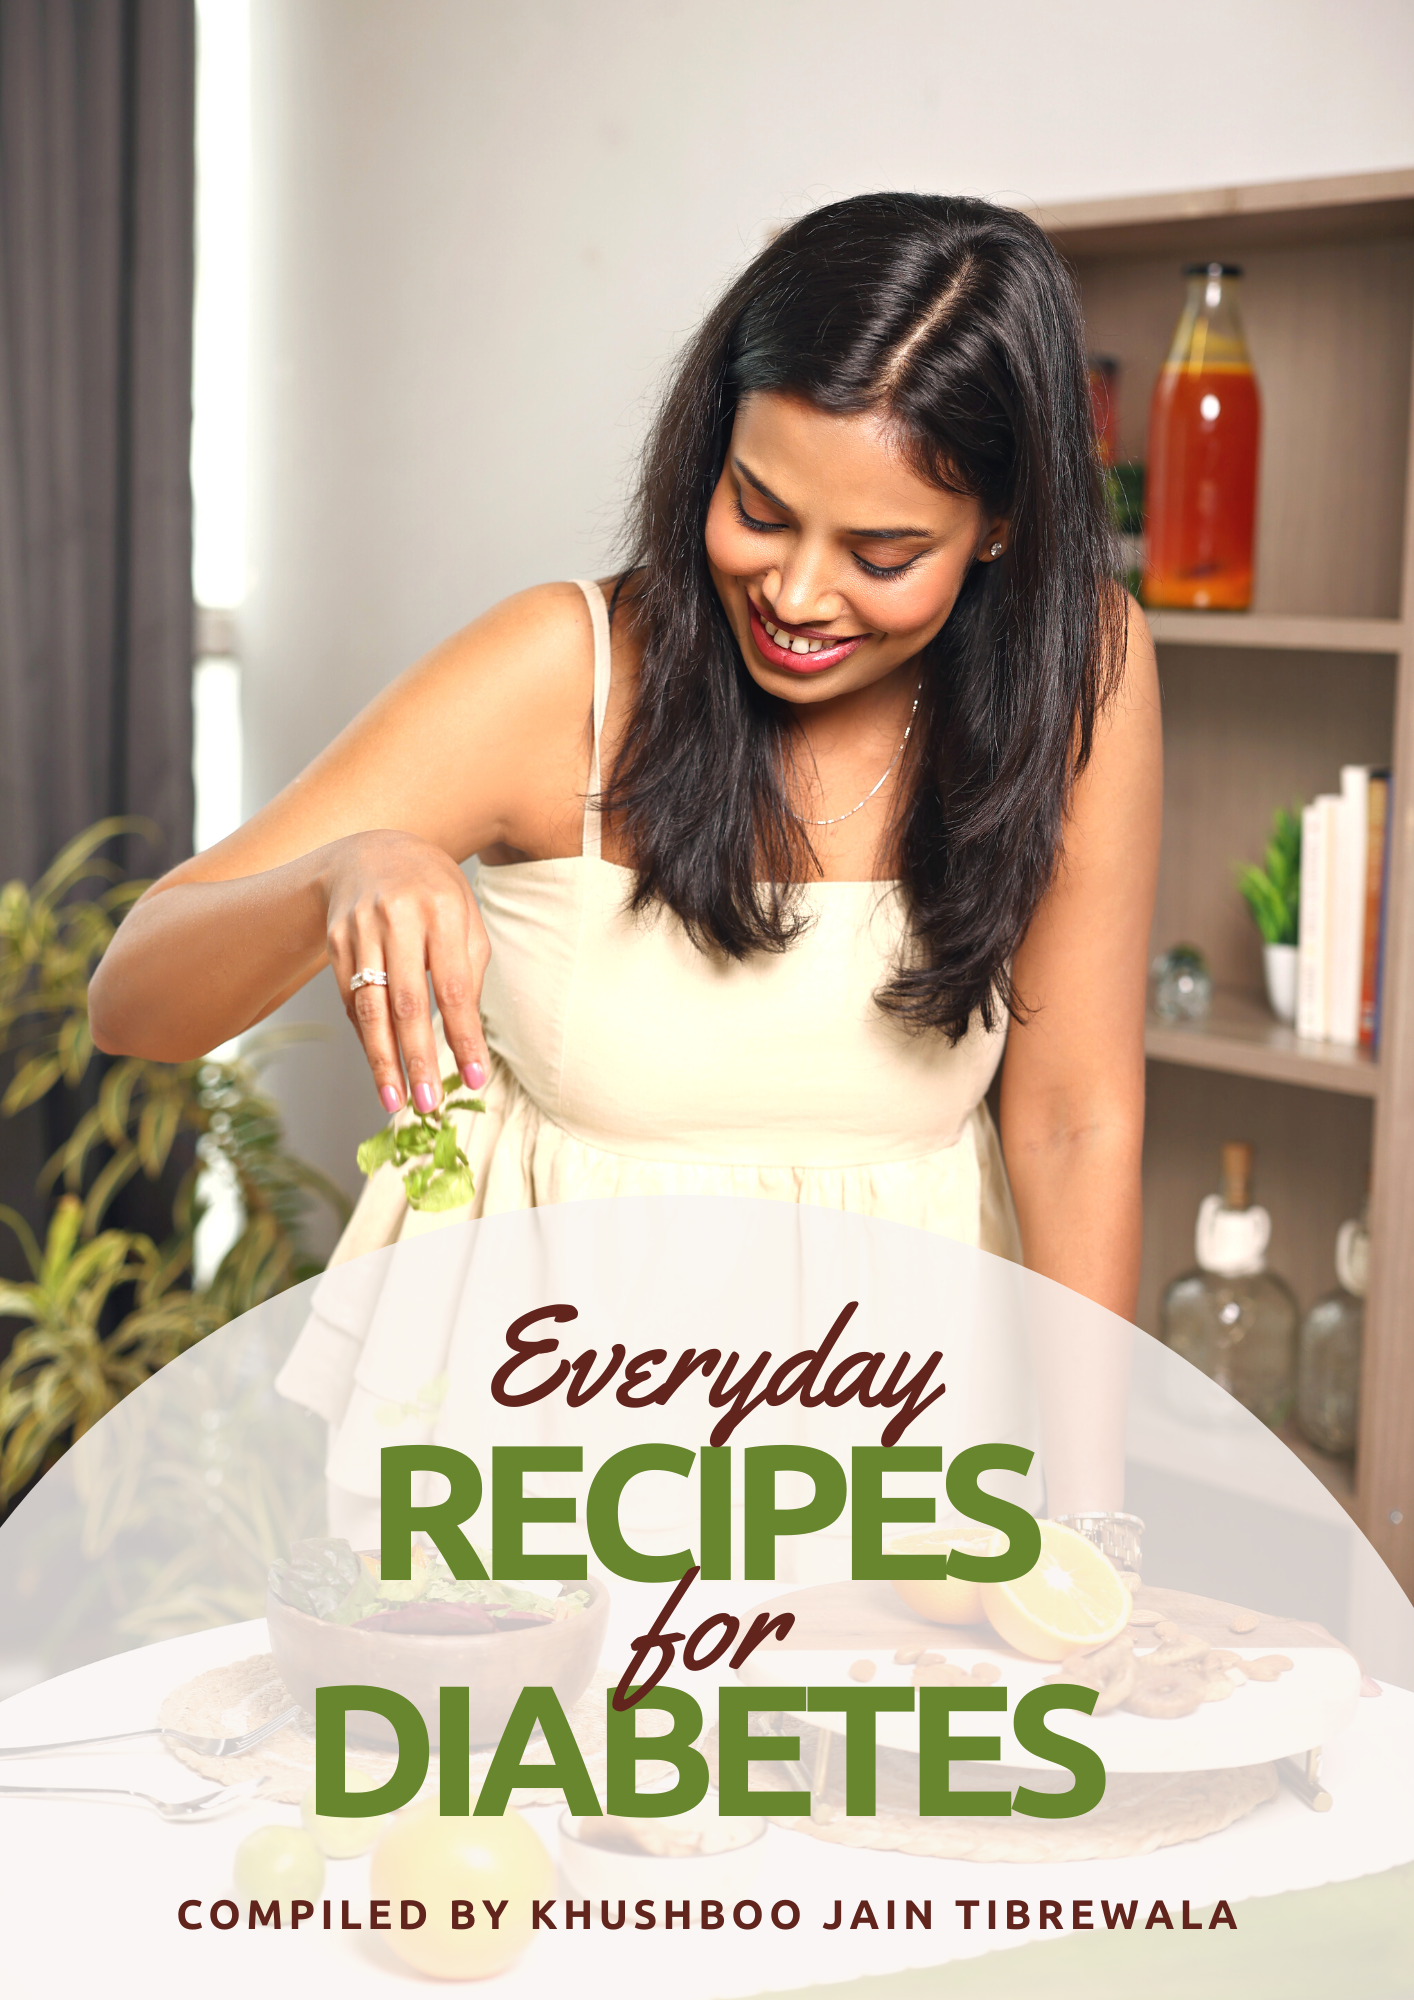 Everyday Recipes for Diabetes by Khushboo Jain Tibrewala